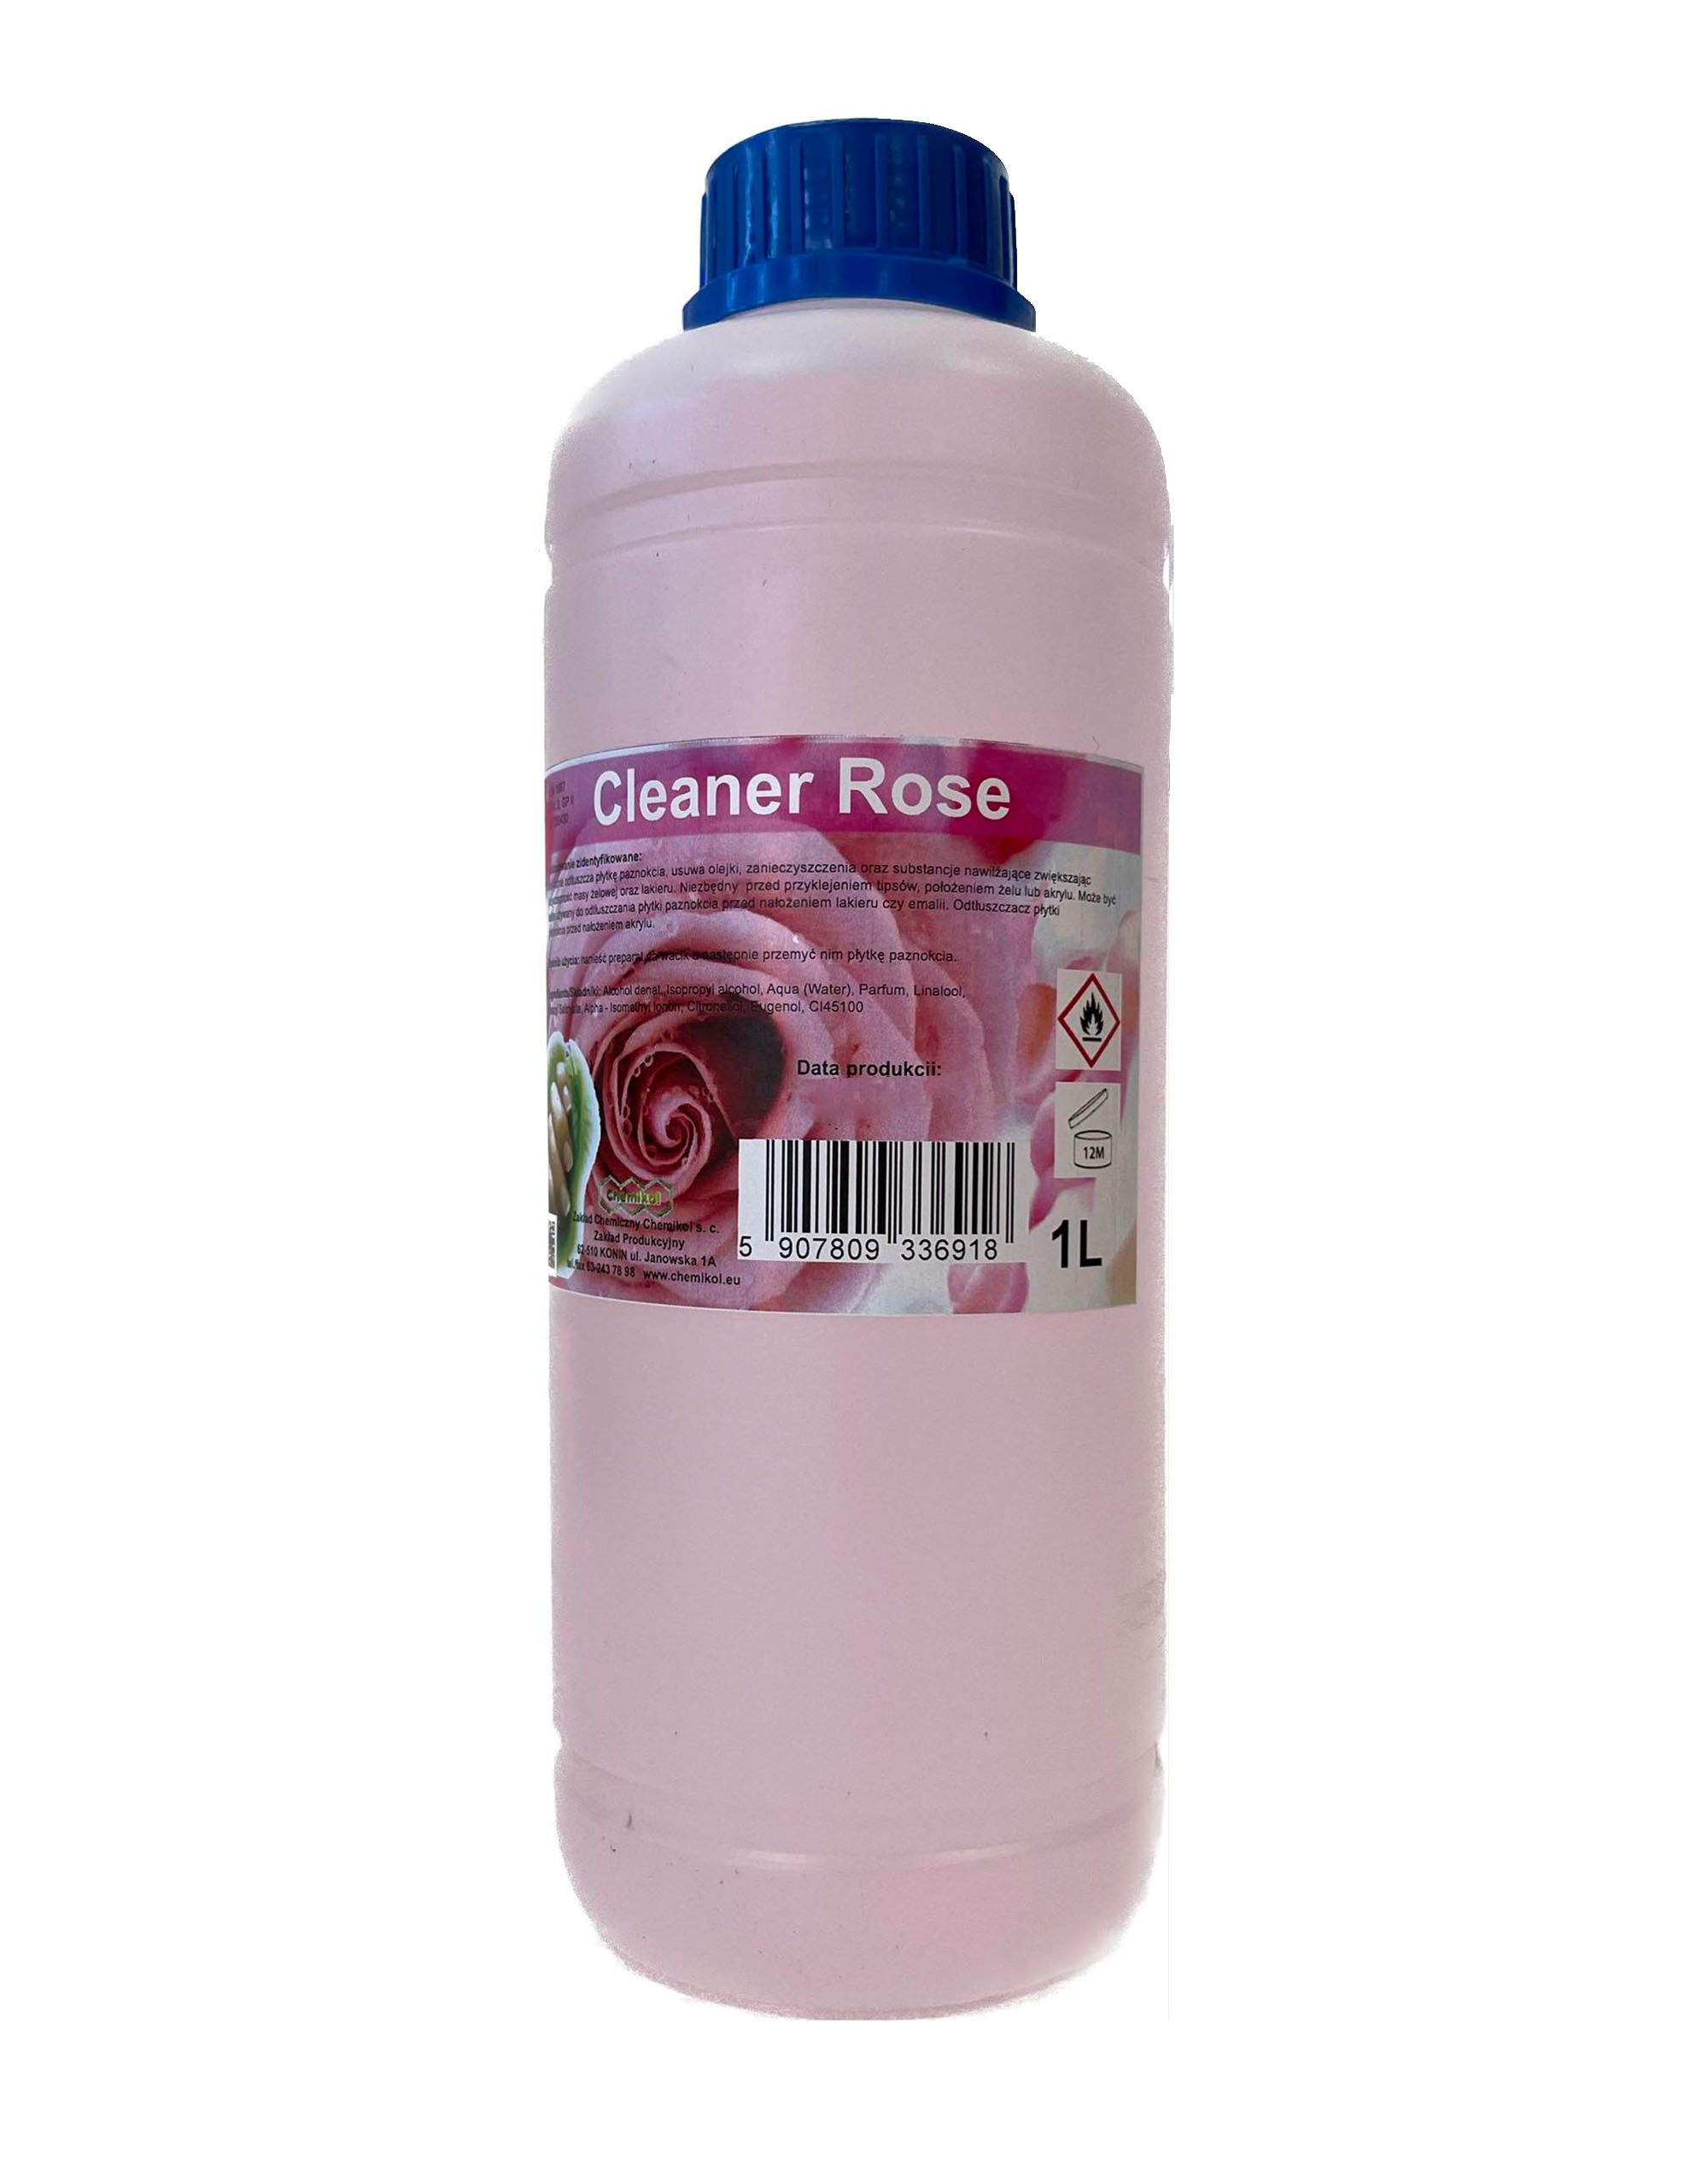 cleaner rose